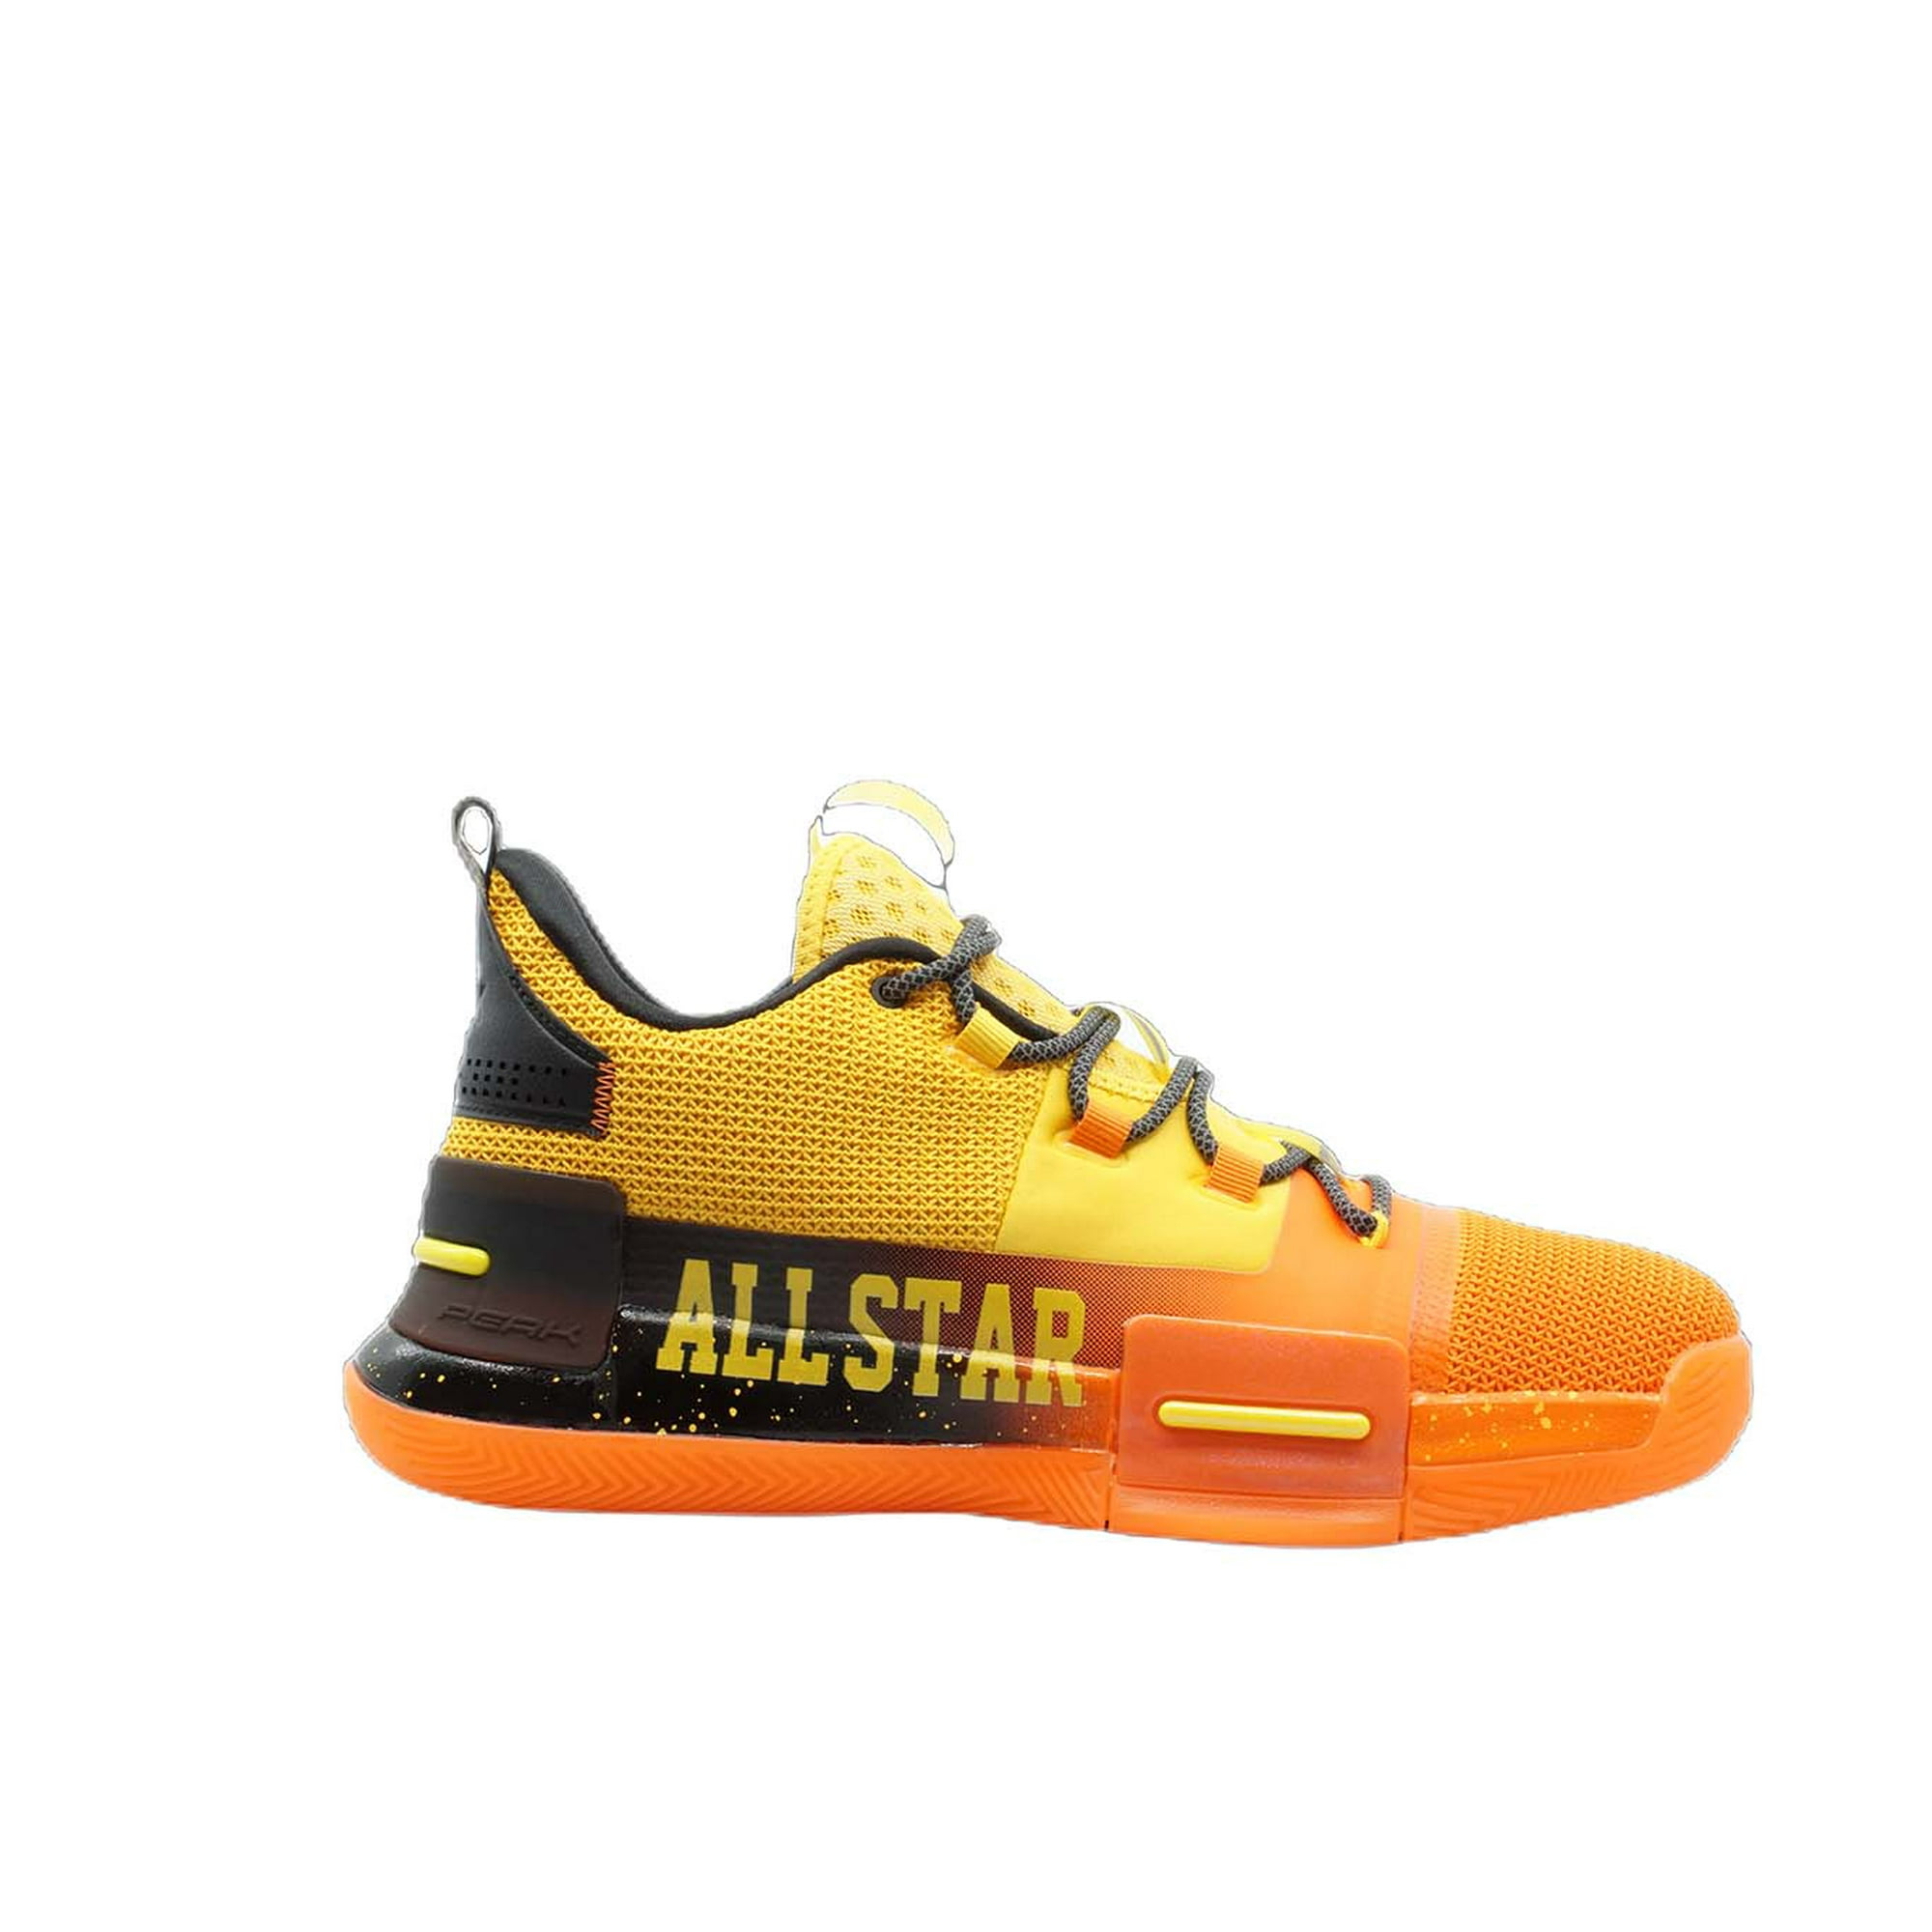 1 Best Selling Basketball Shoe on   PEAK Lou Williams Shoe Review 